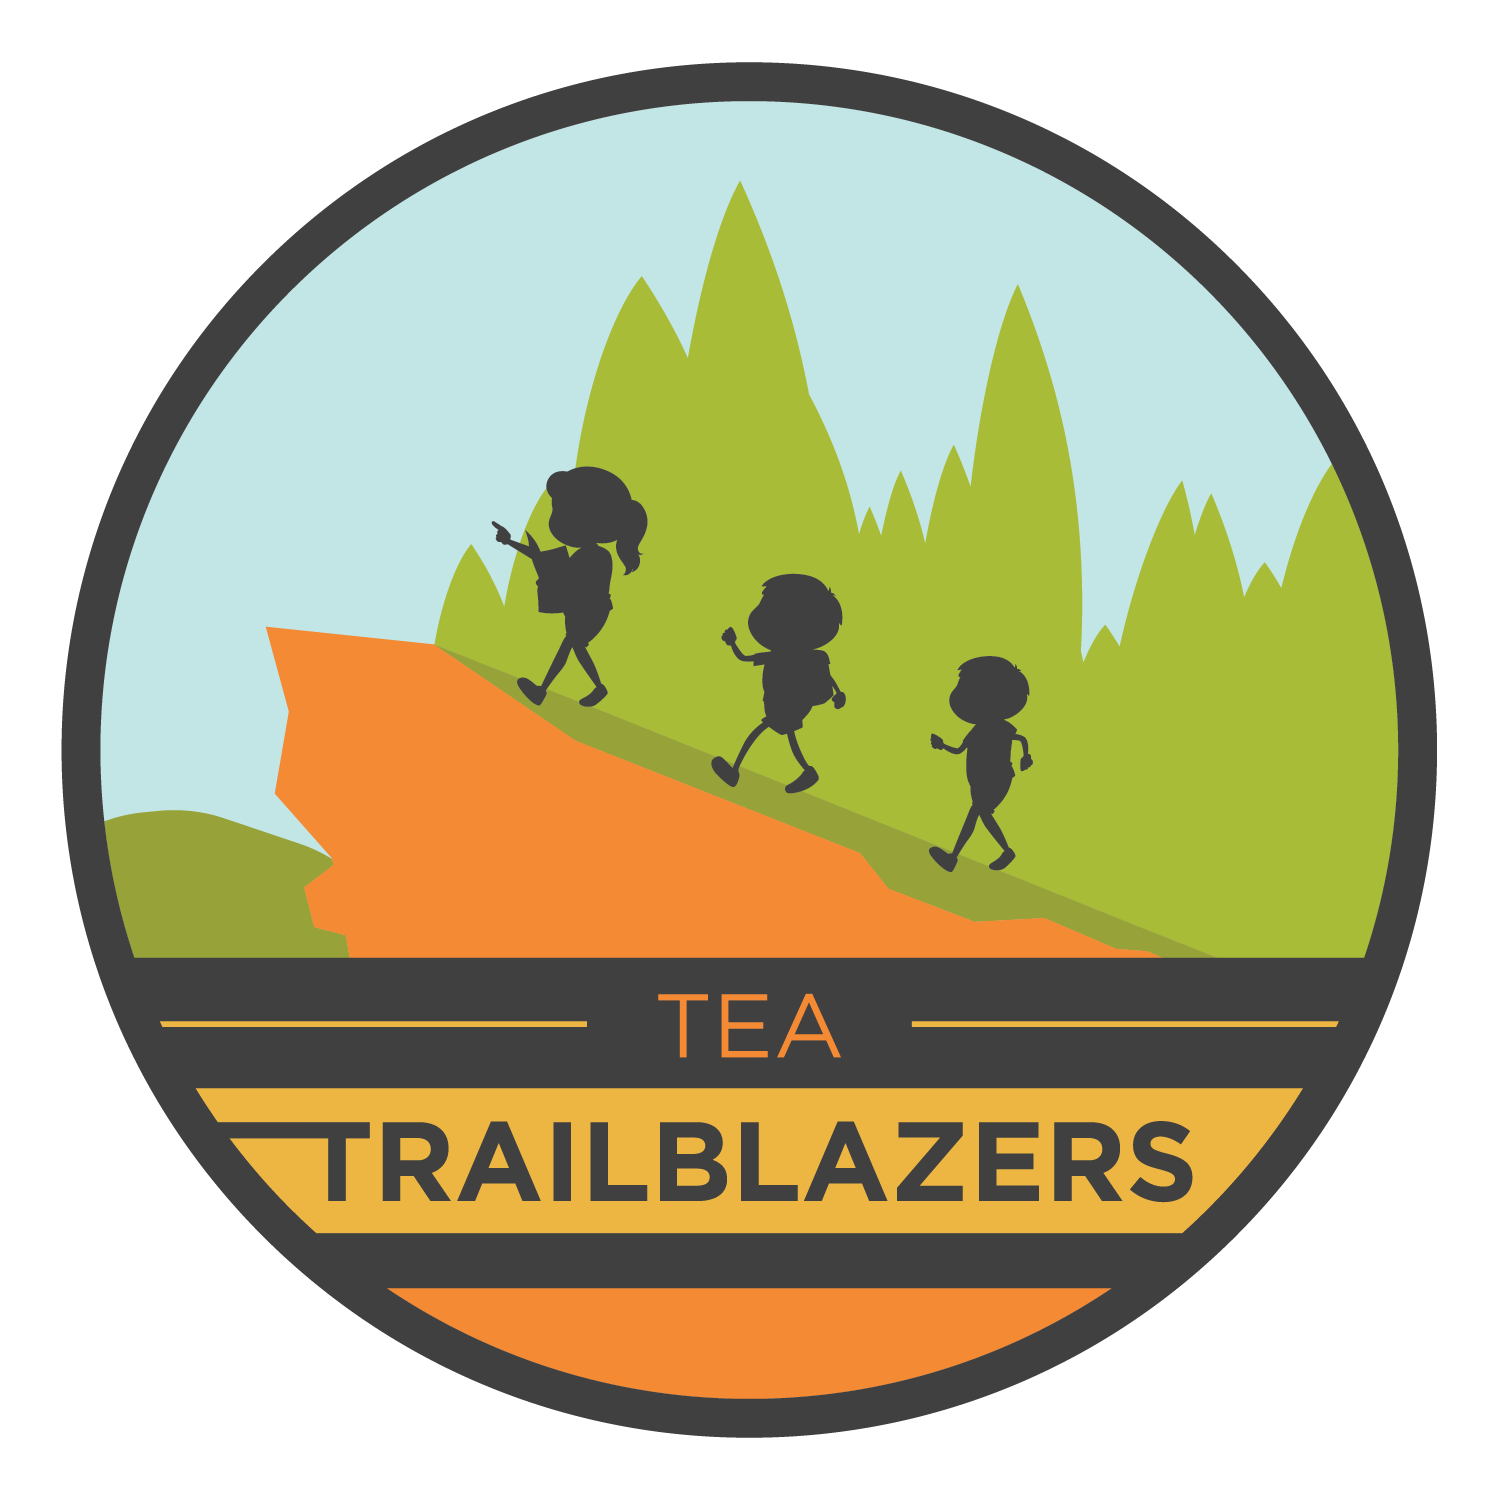 Tea Trailblazers Childcare Center